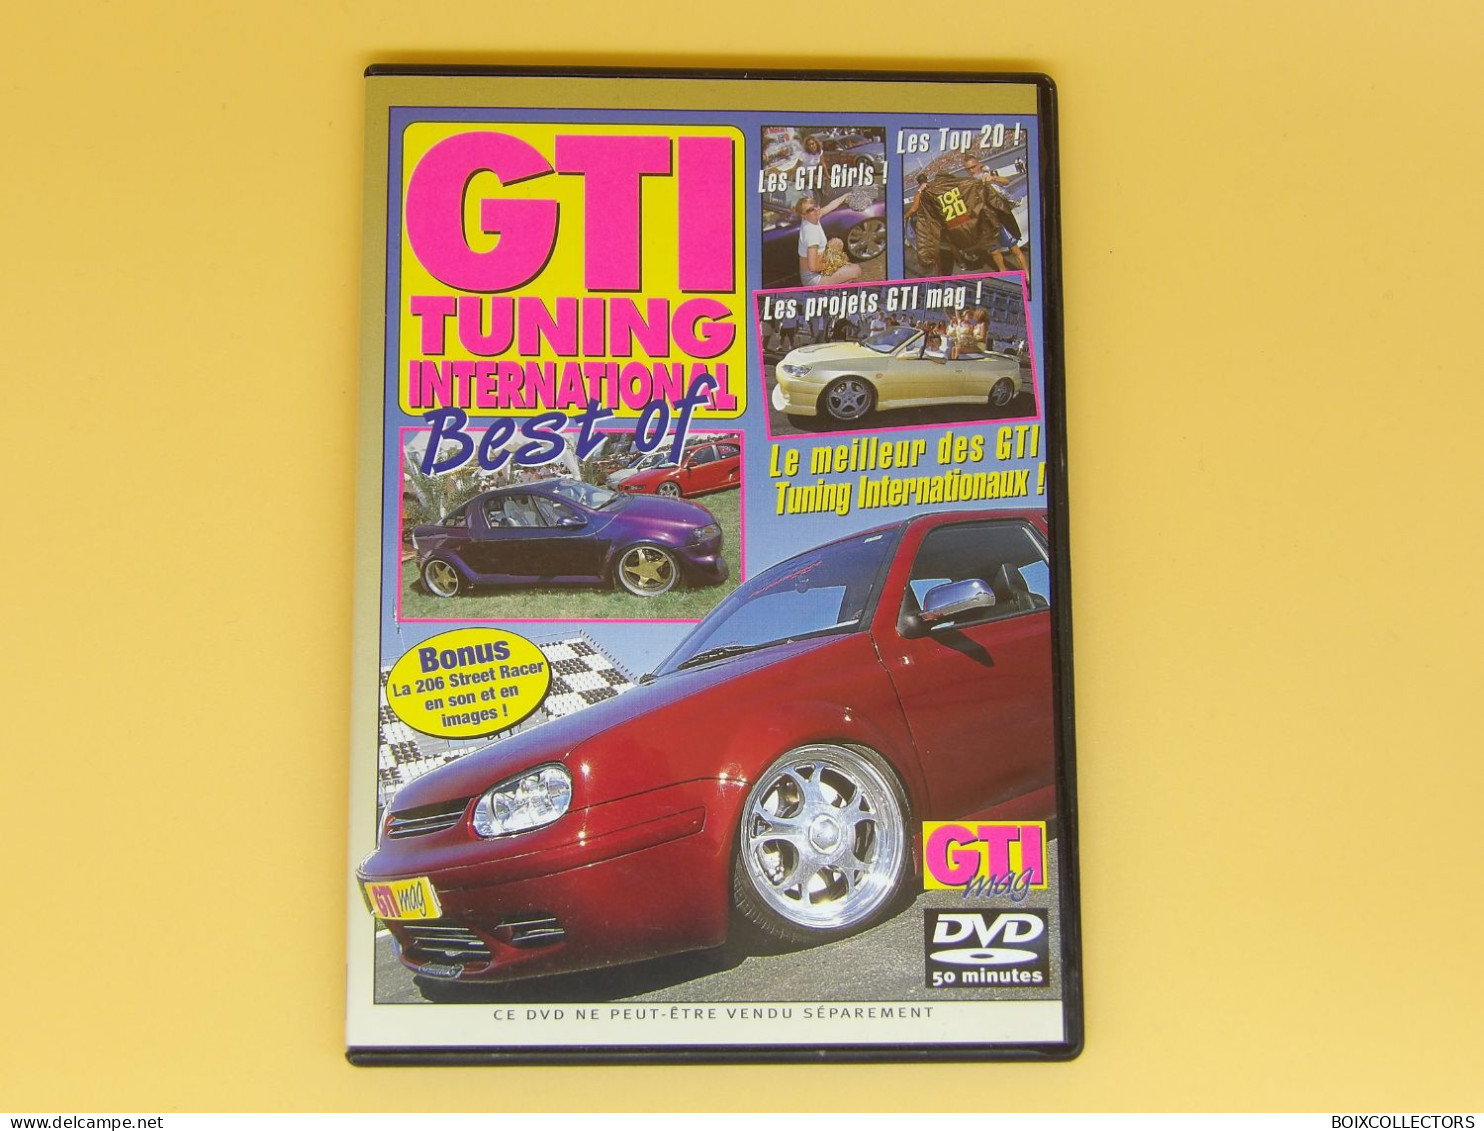 DVD BEST OF  GTI TUNING INTERNATIONAL - GTI MAG - Automobile - F1